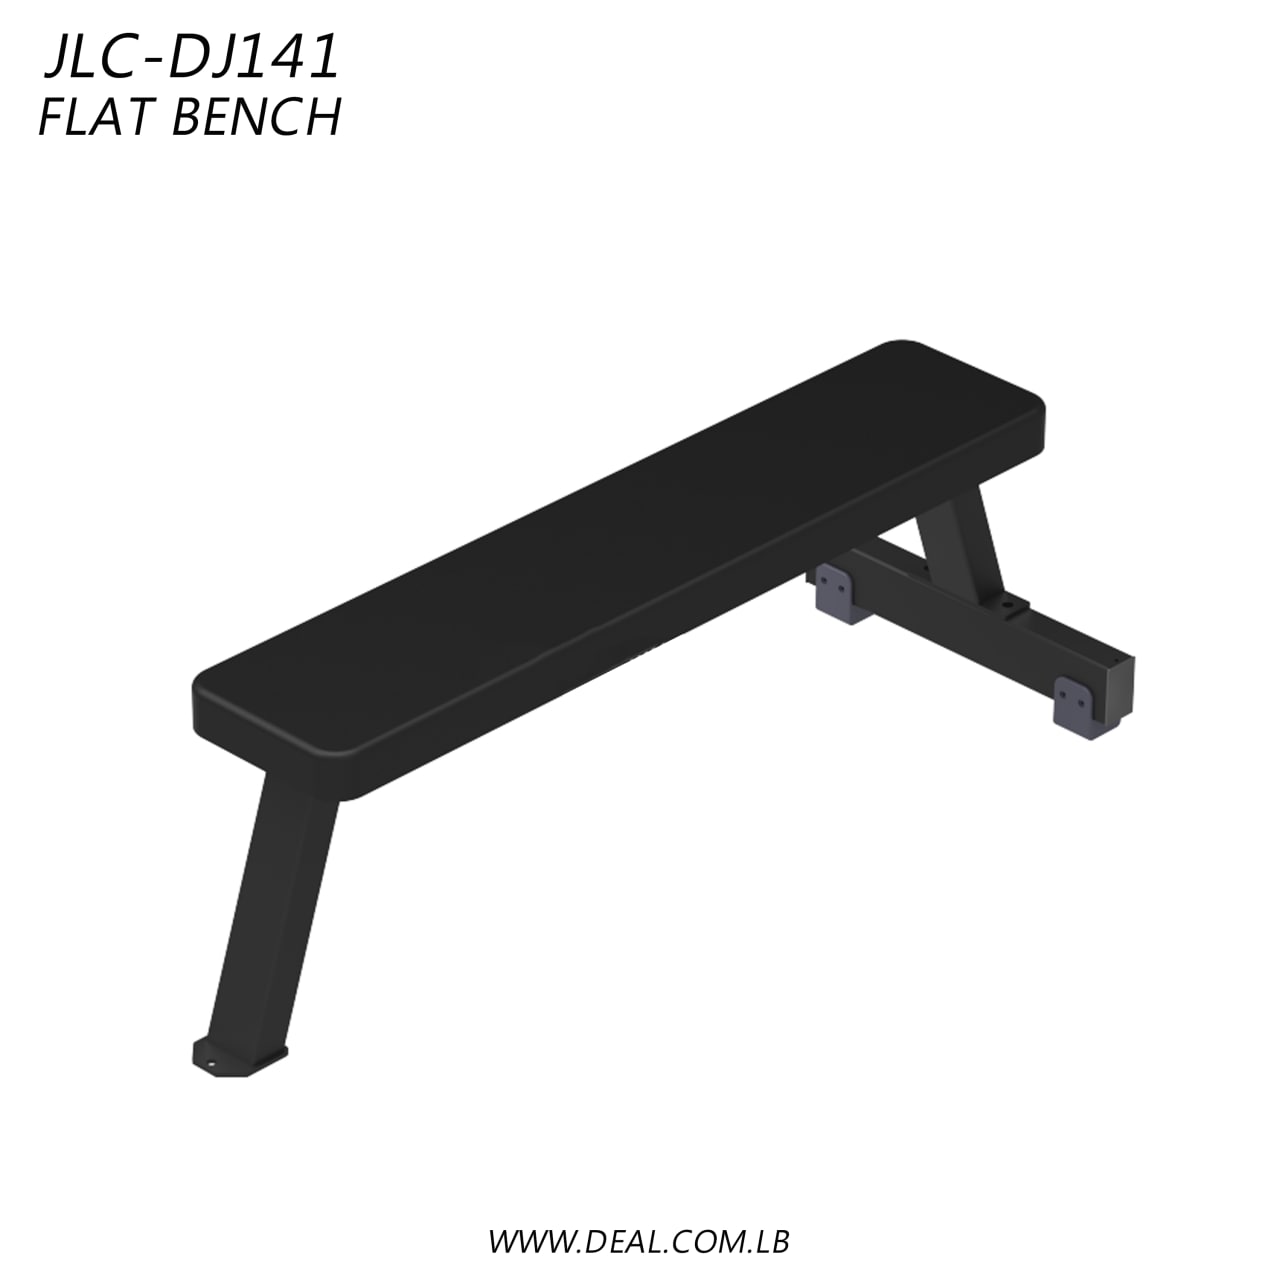 JLC-DJ141 | Flat bench